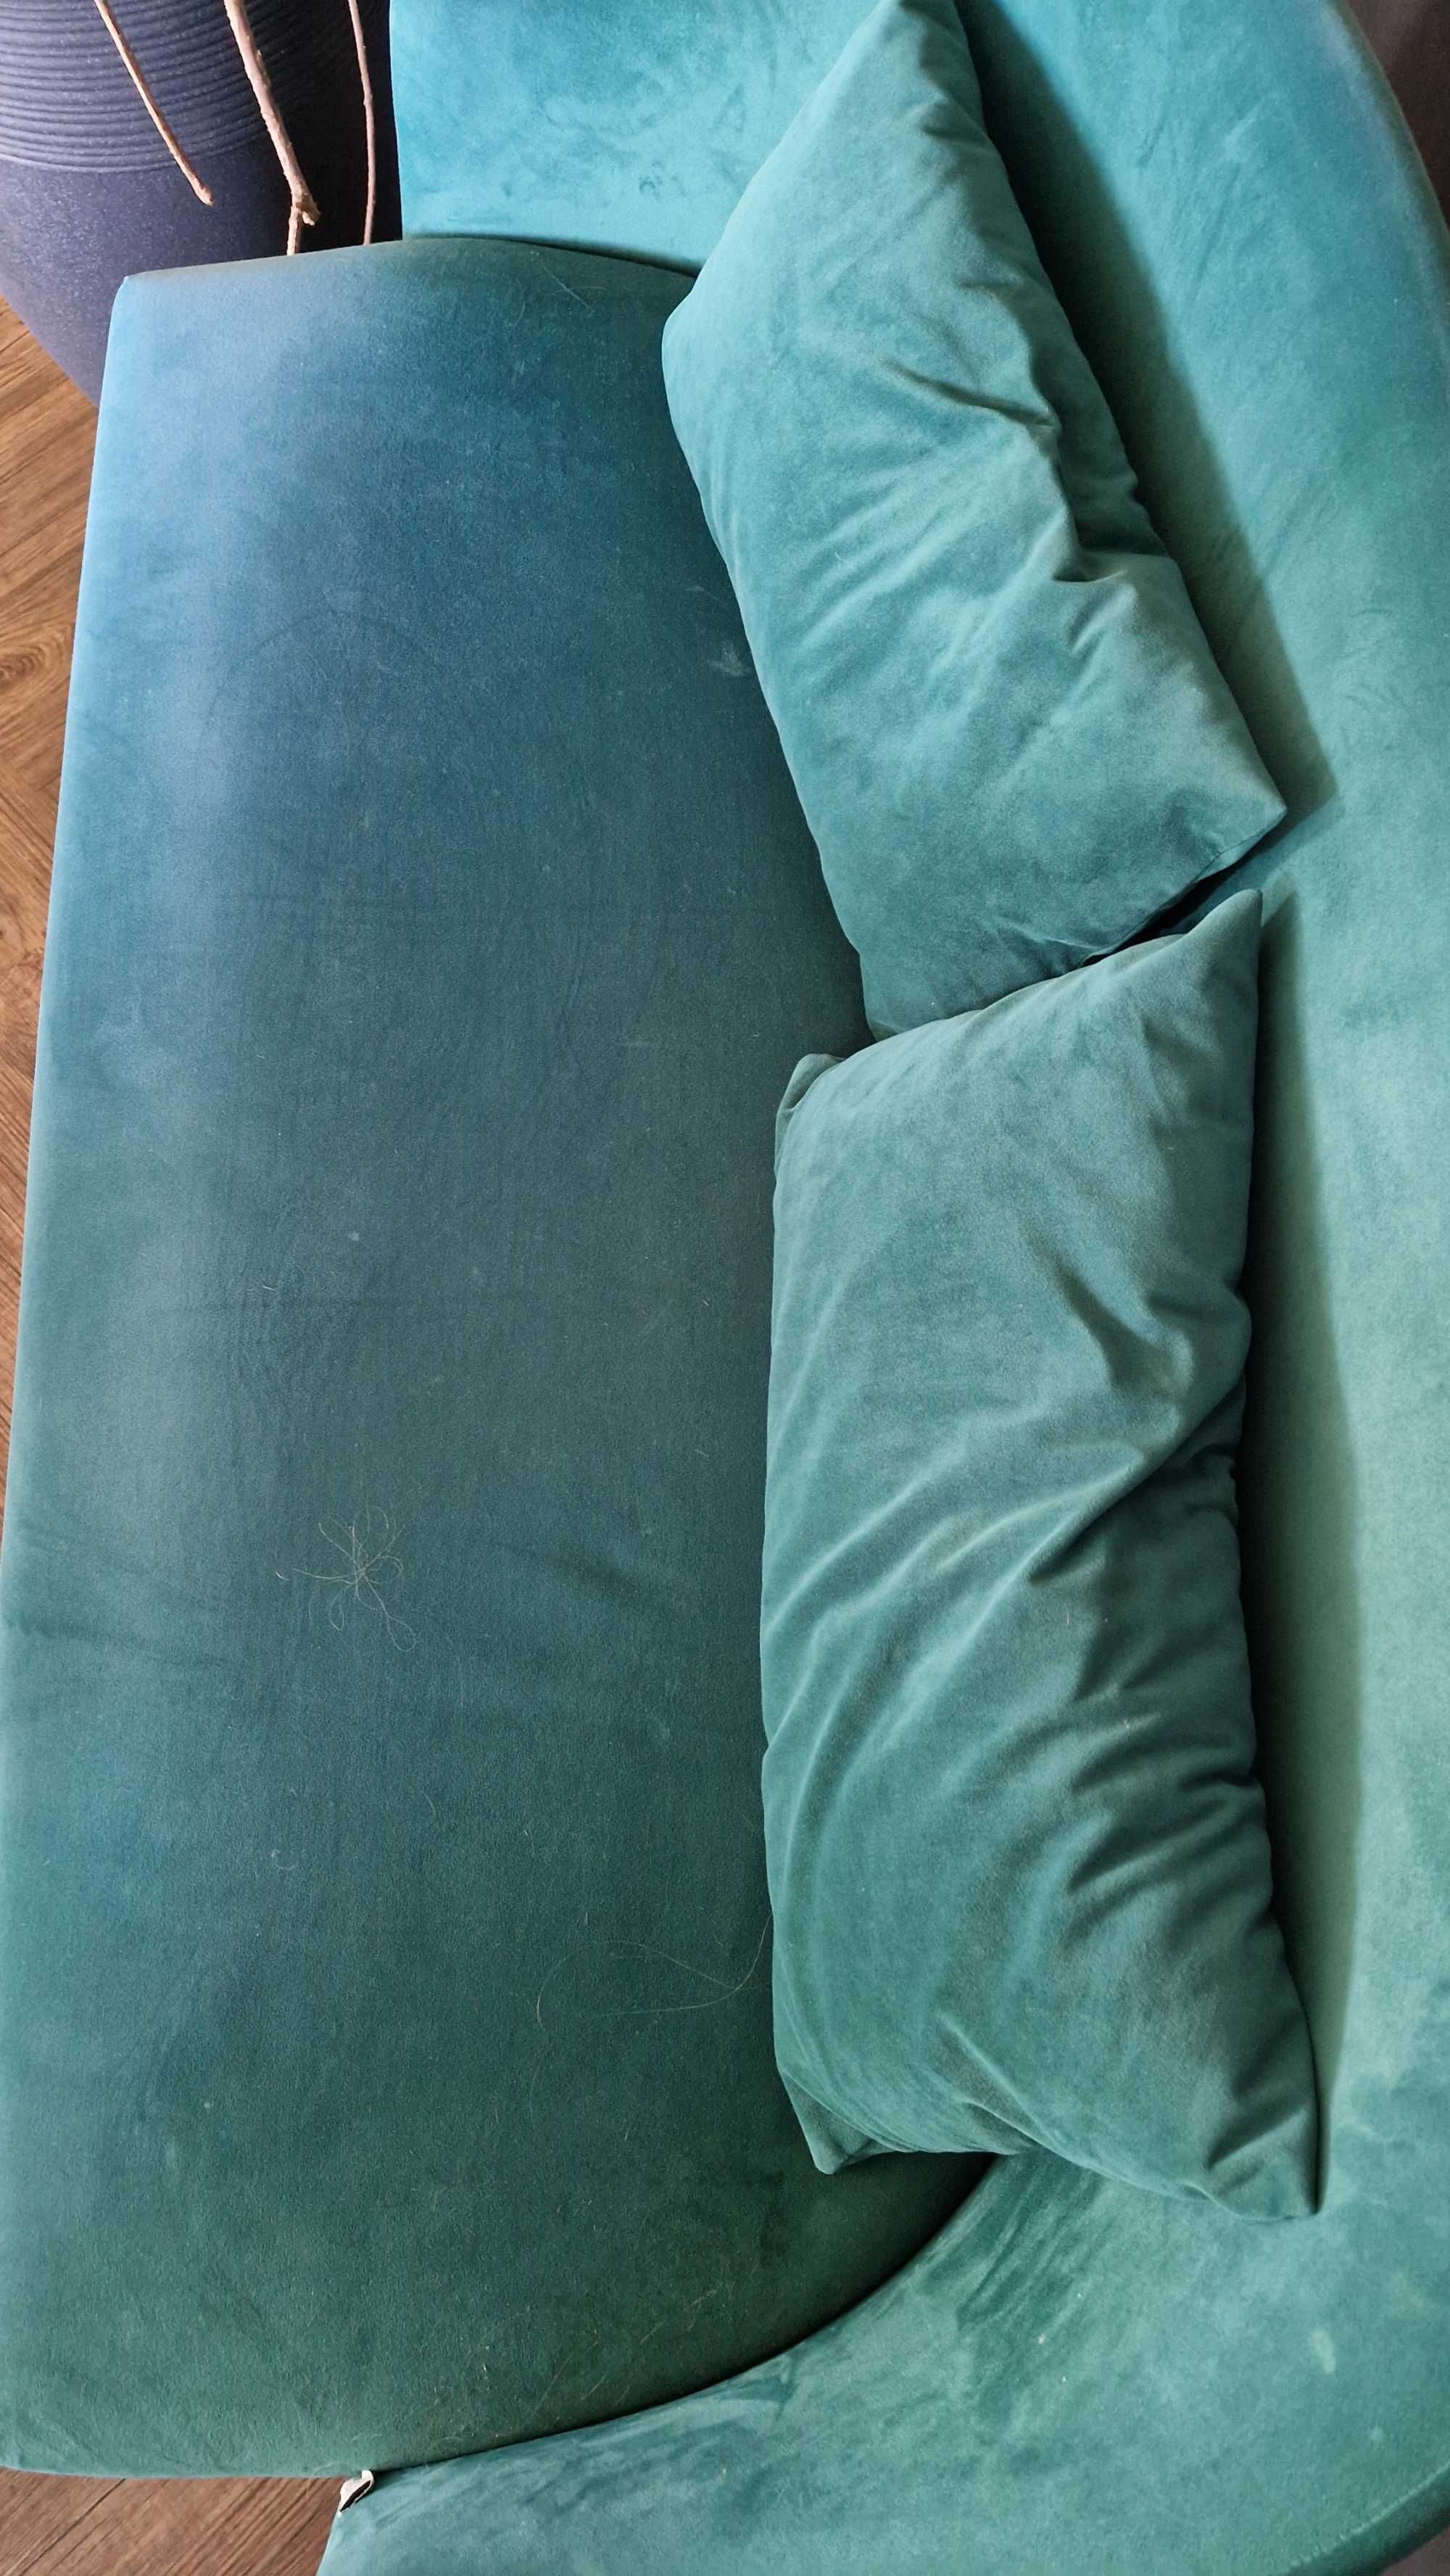 Sofa dwuosobowa zielona